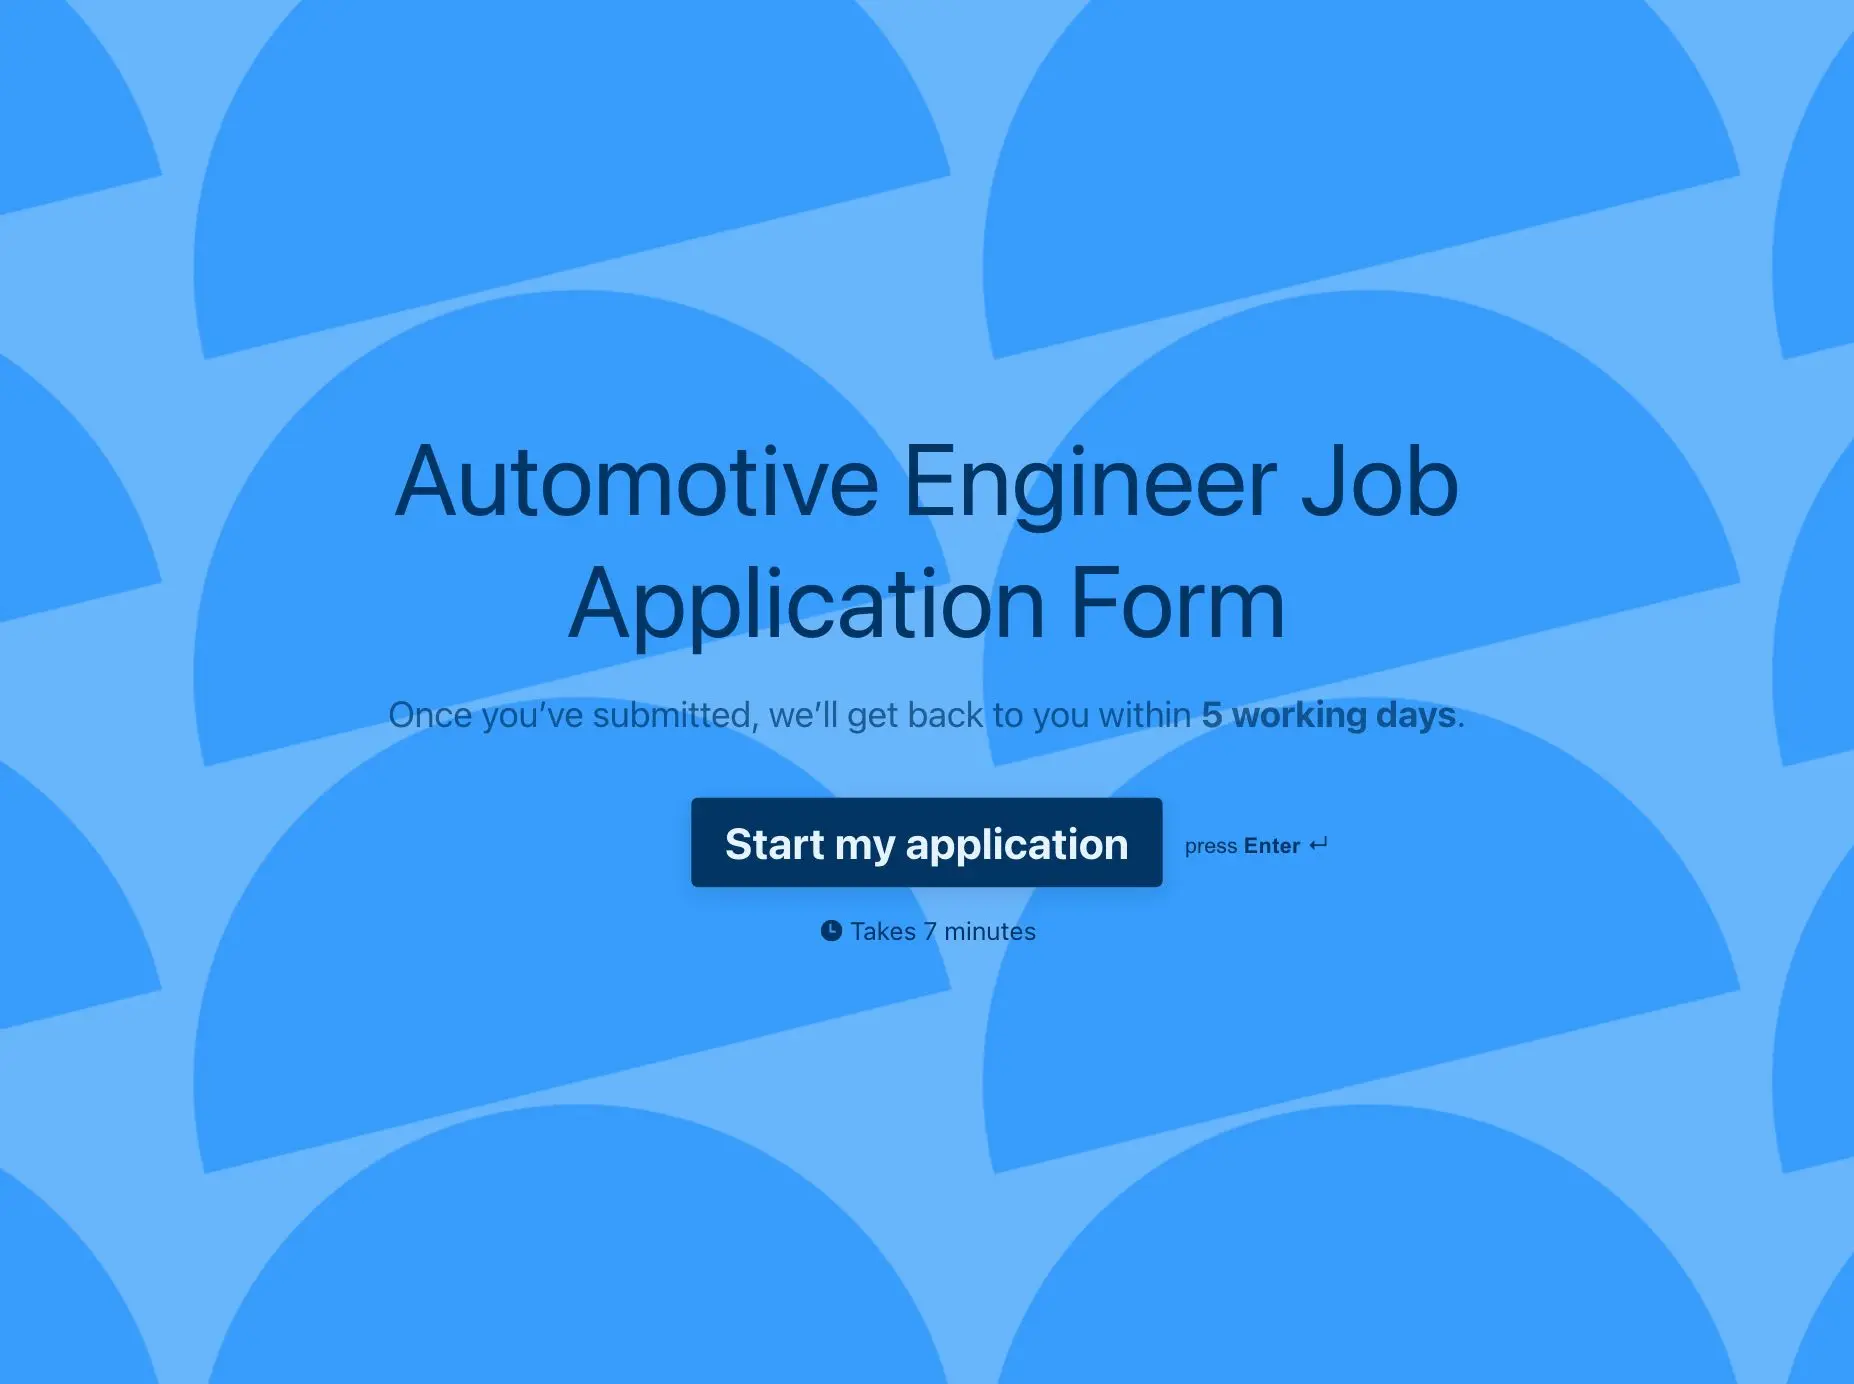 Automotive Engineer Job Application Form Template Hero